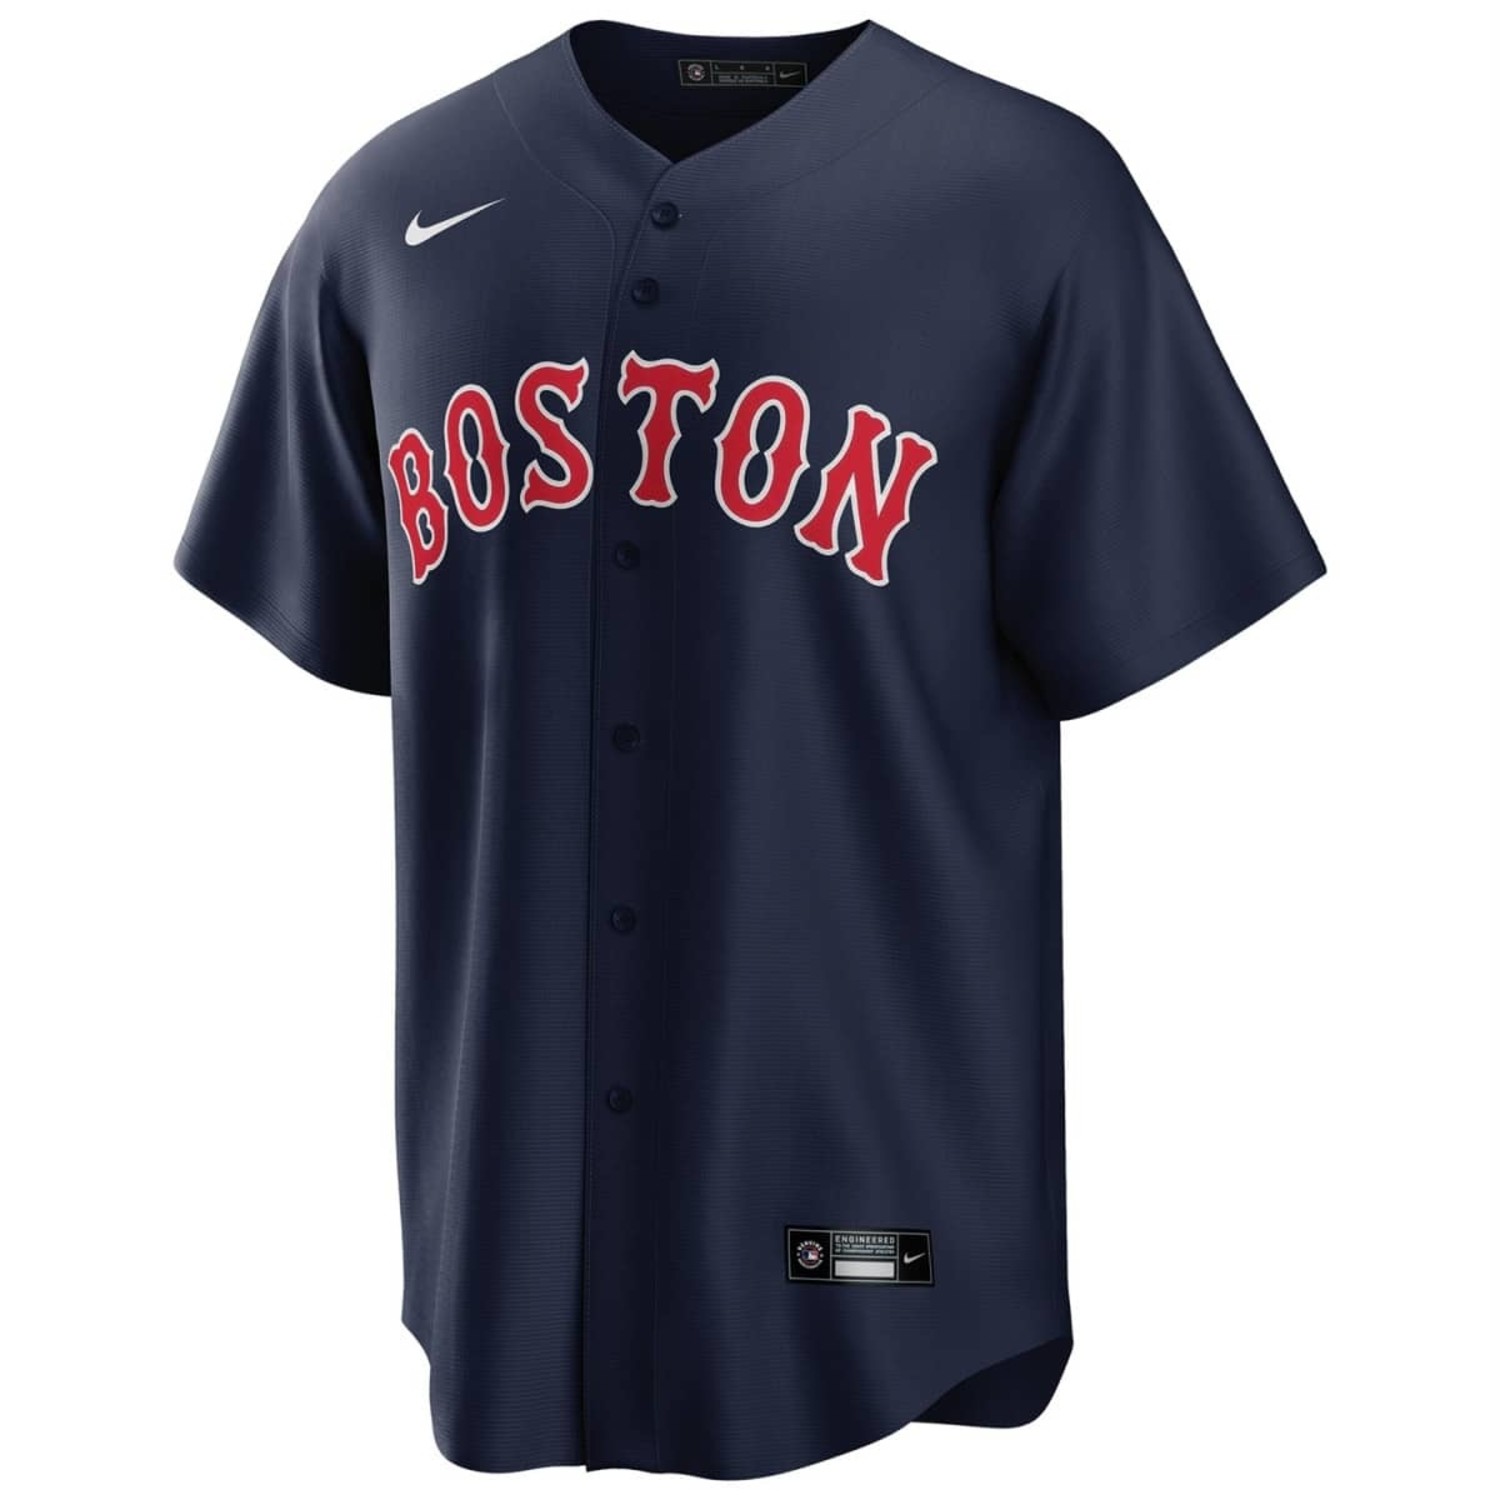 Nike Offcourt (MLB Boston Red Sox) Slide.